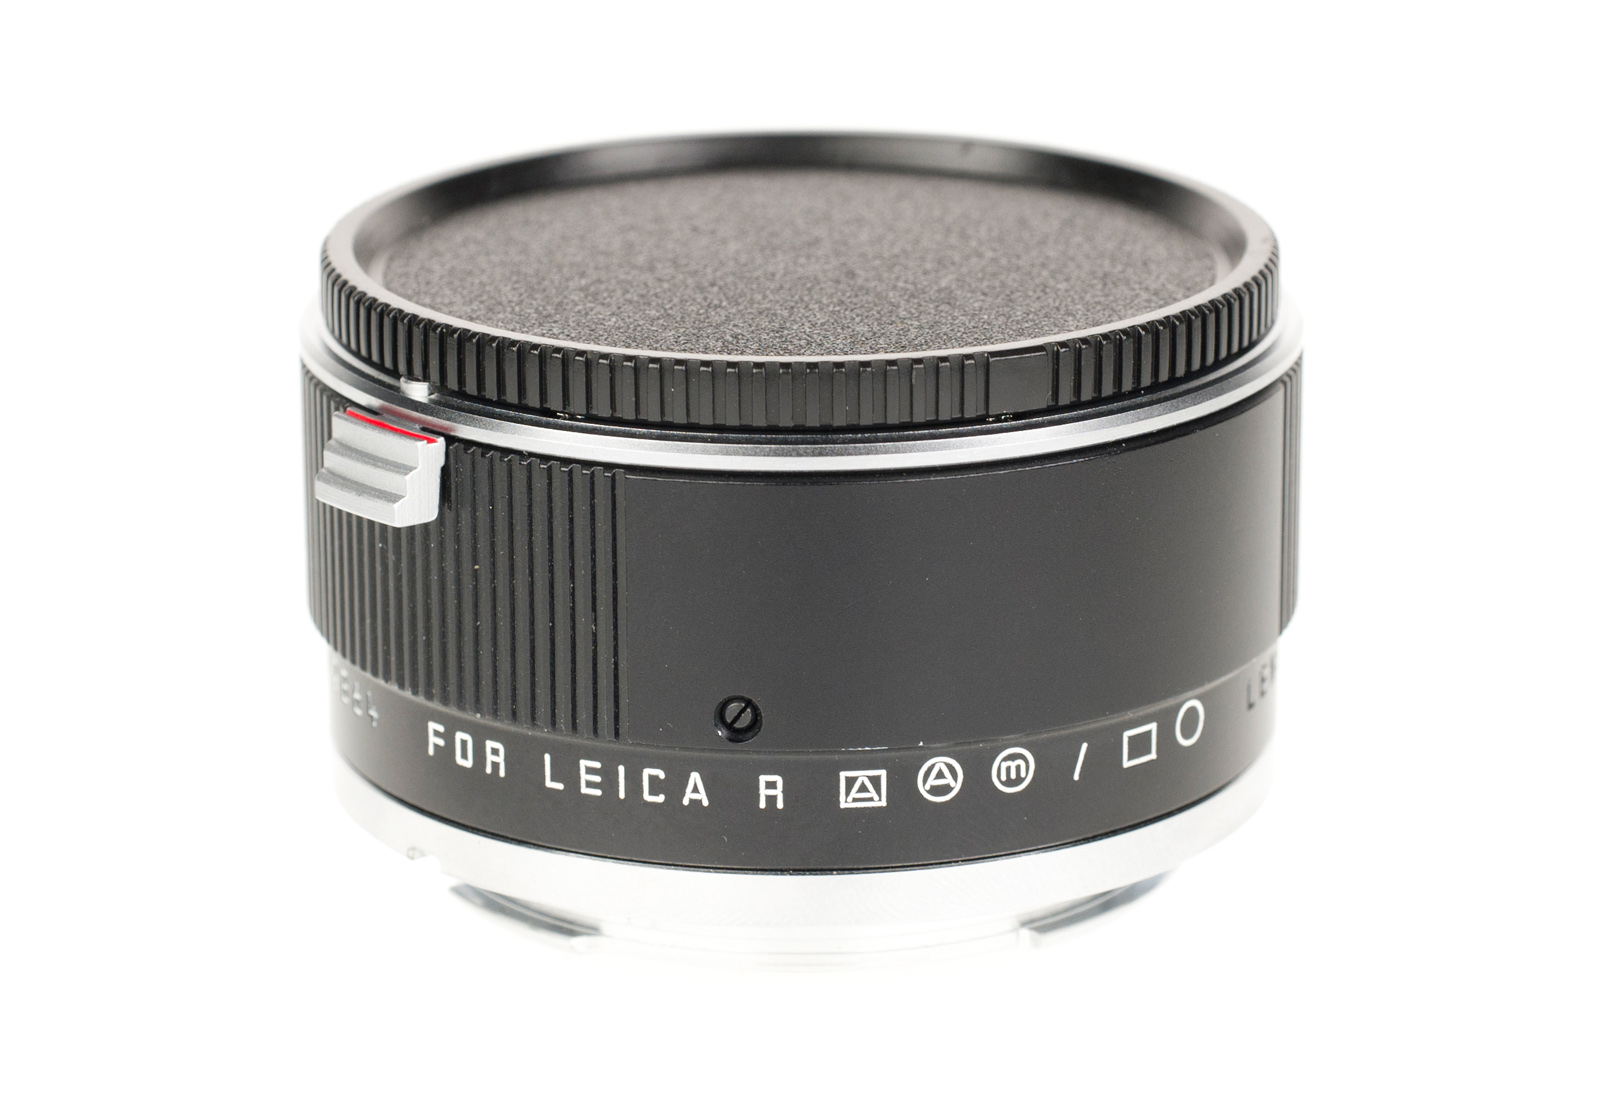 Leica Extender-R 2x 11236